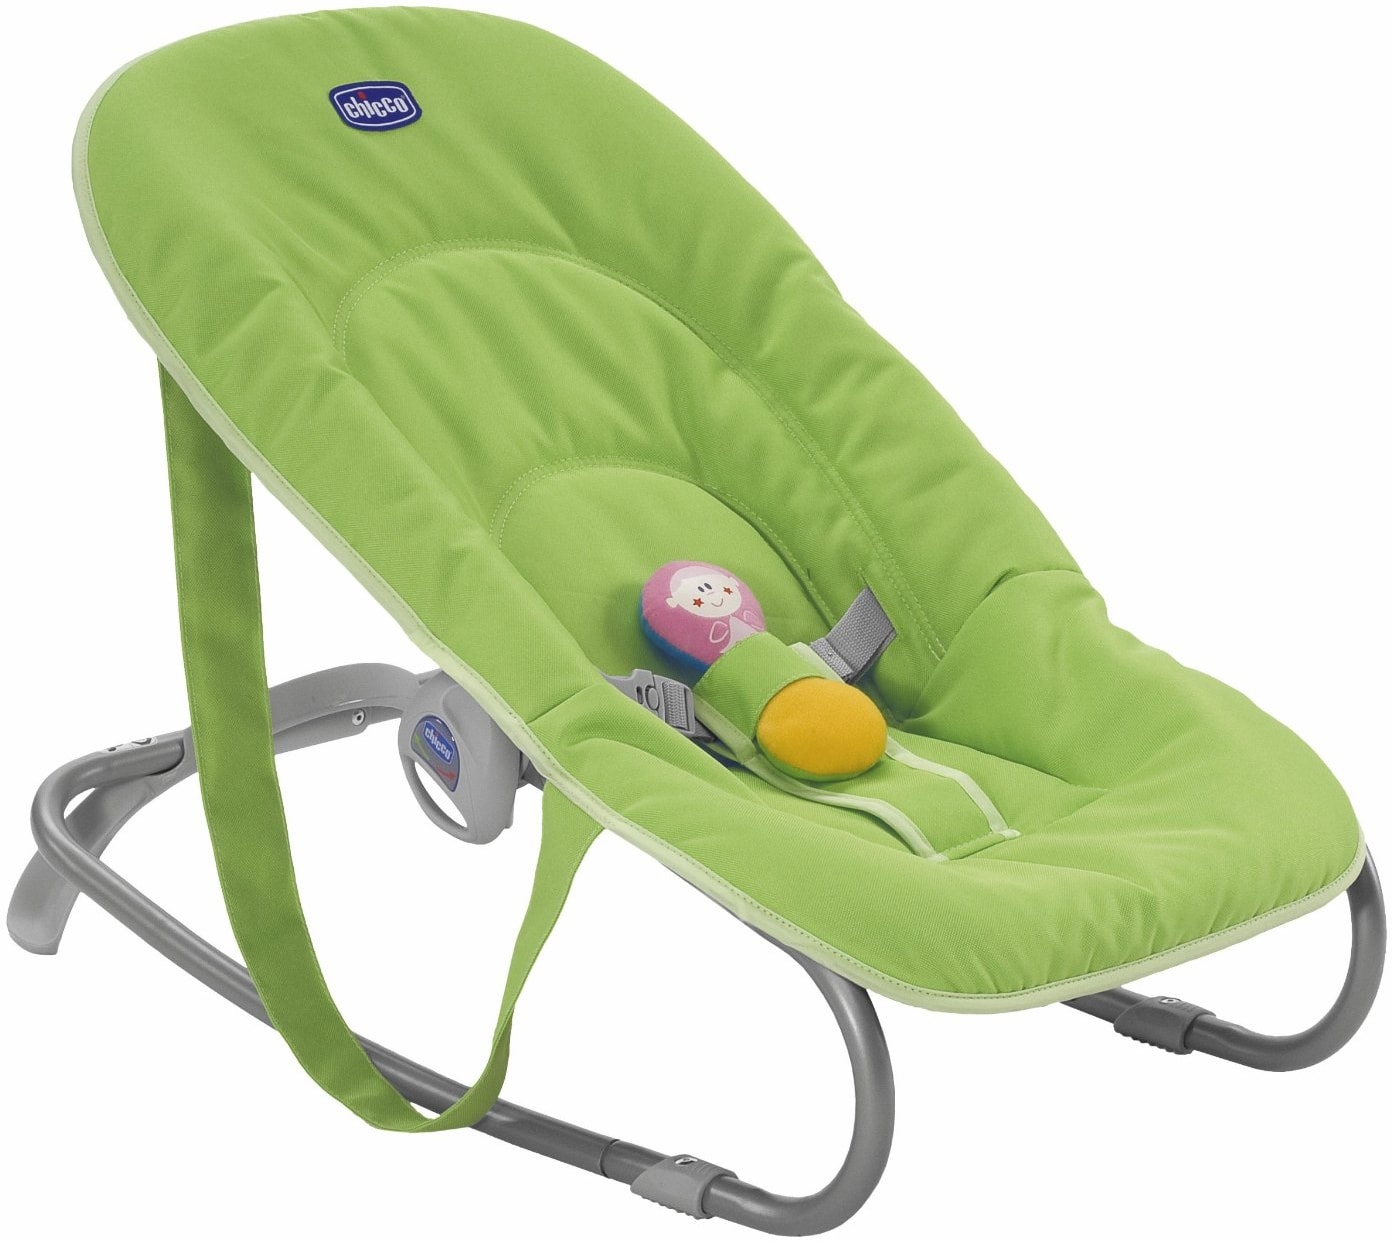 CHICCO - Transat bébé Easy relax vert